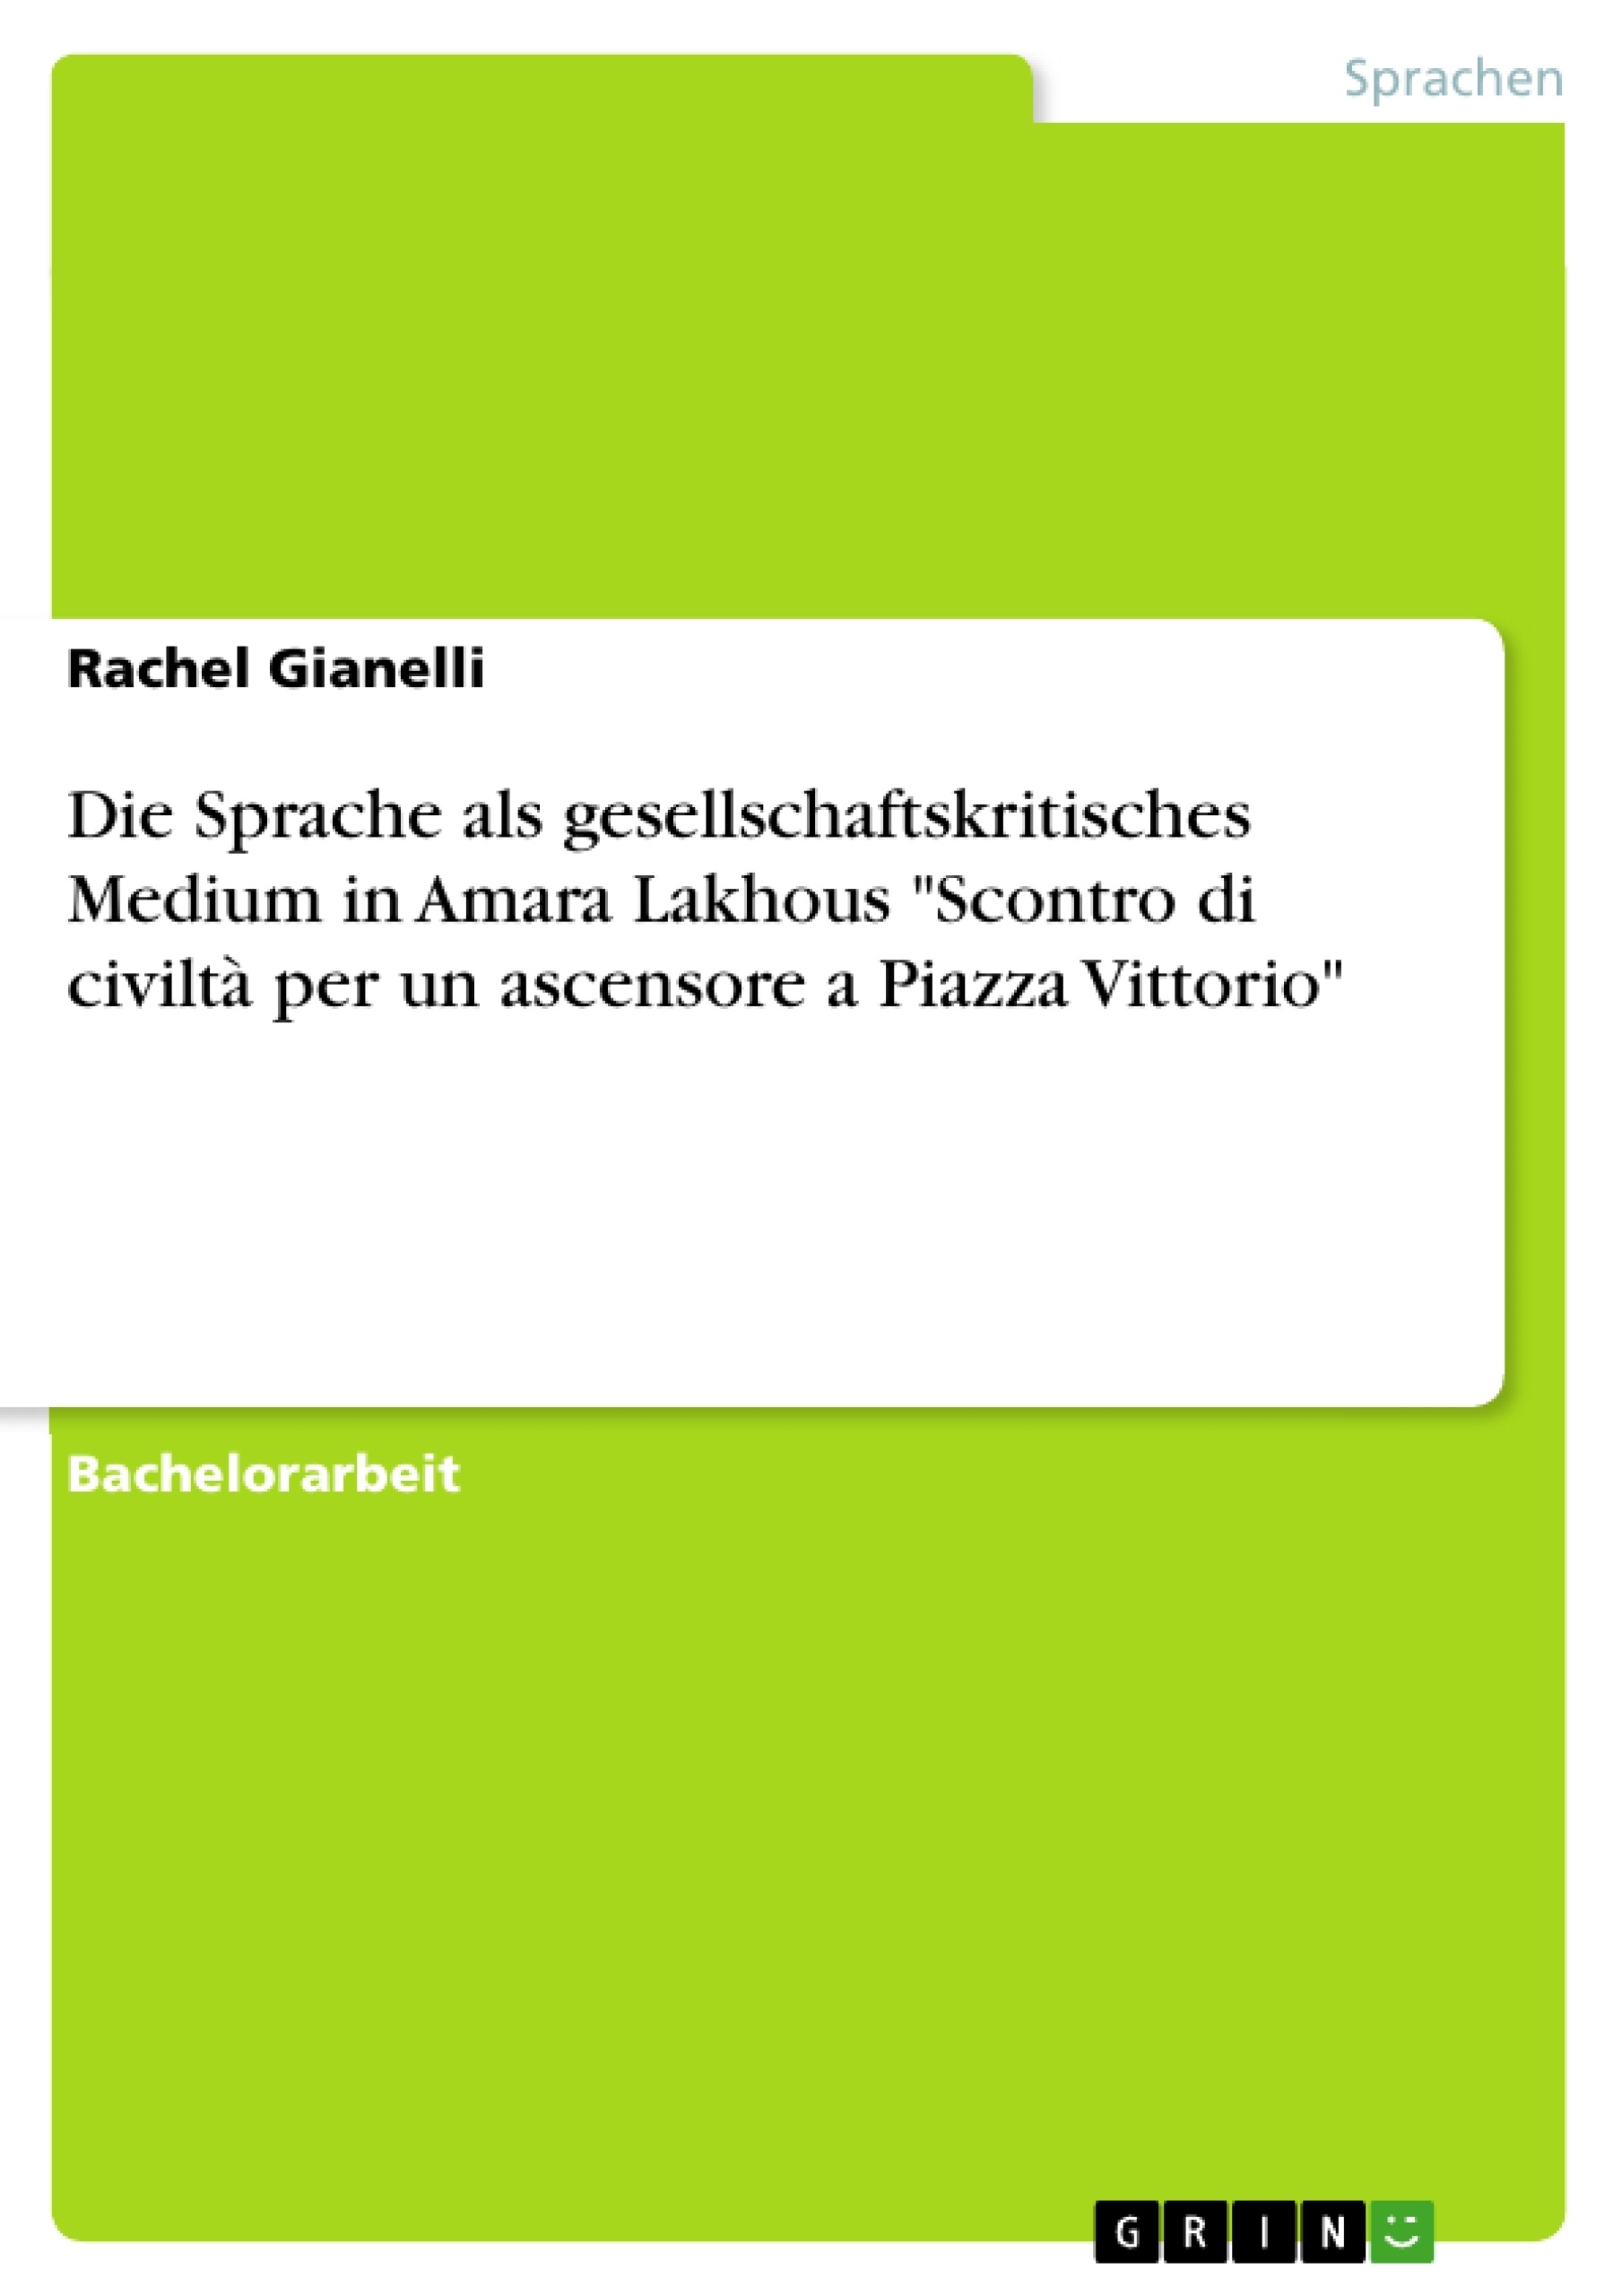 Titel: Die Sprache als gesellschaftskritisches Medium in Amara Lakhous "Scontro di civiltà per un ascensore a Piazza Vittorio"